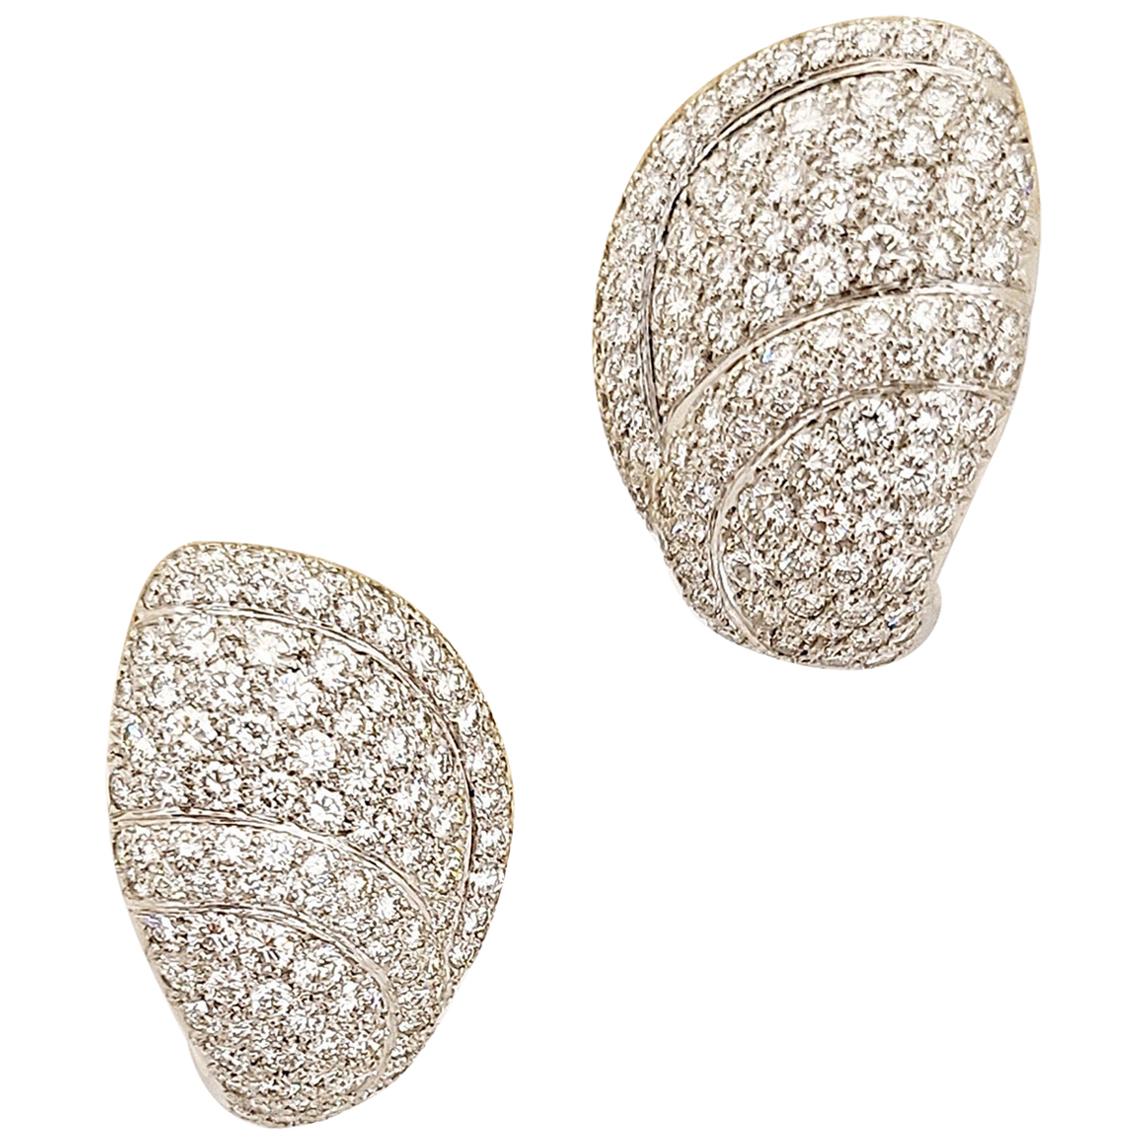 Roger Mathon for Cellini NYC 18 Karat White Gold and 5.39 Carat Diamond Earrings